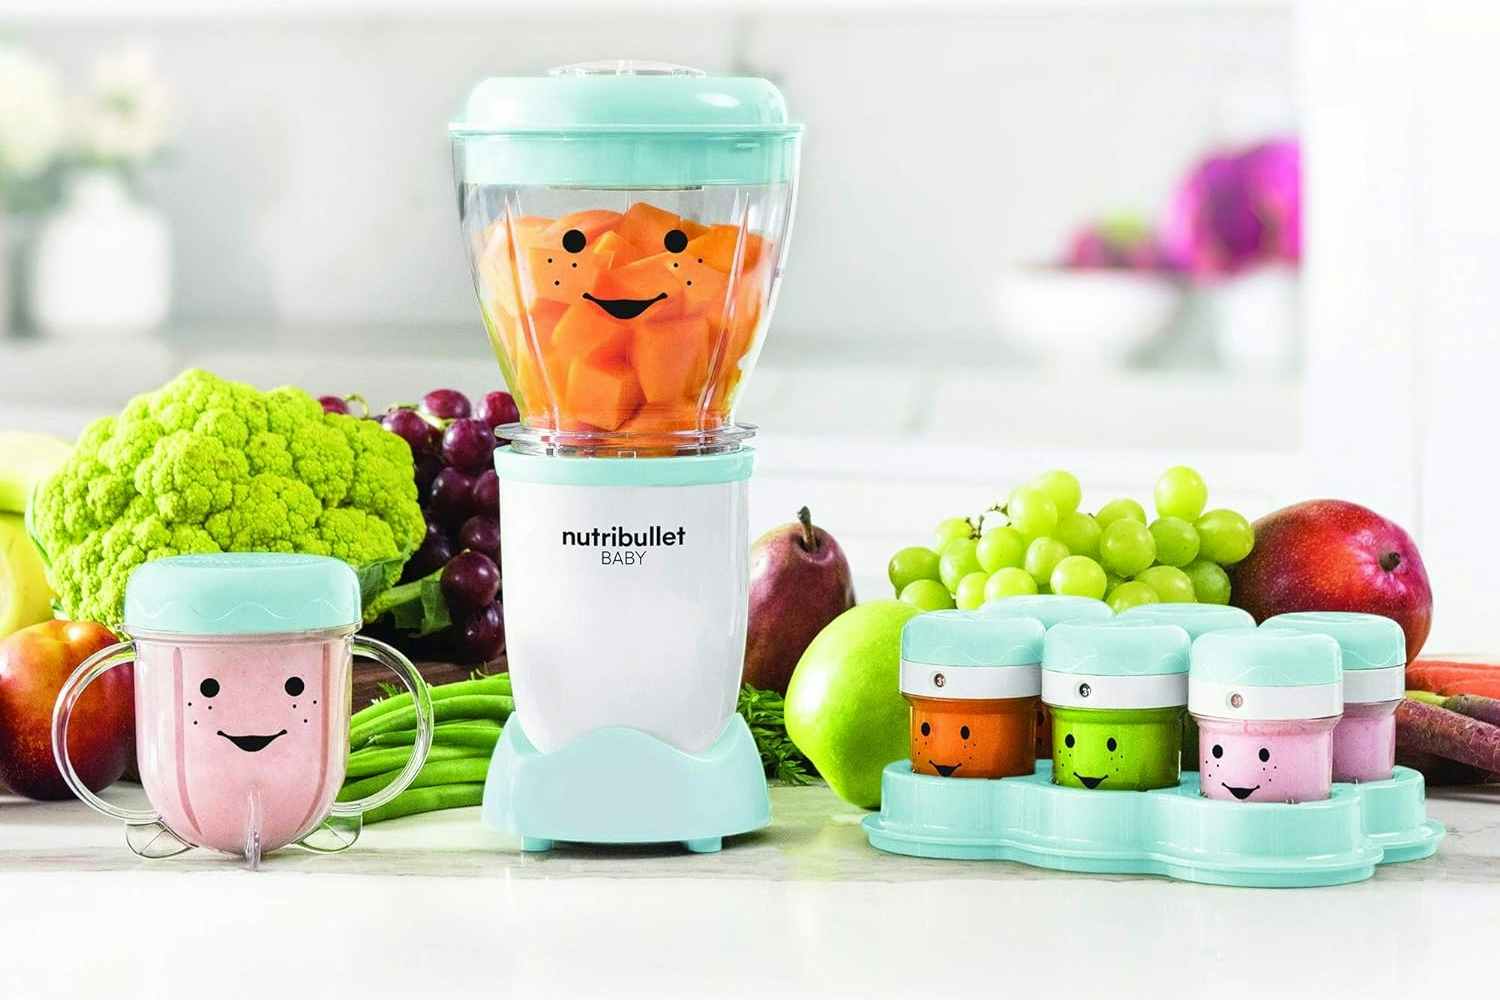 NutriBullet Baby Complete Food-Making System, $37.97 on Amazon (Reg. $70)